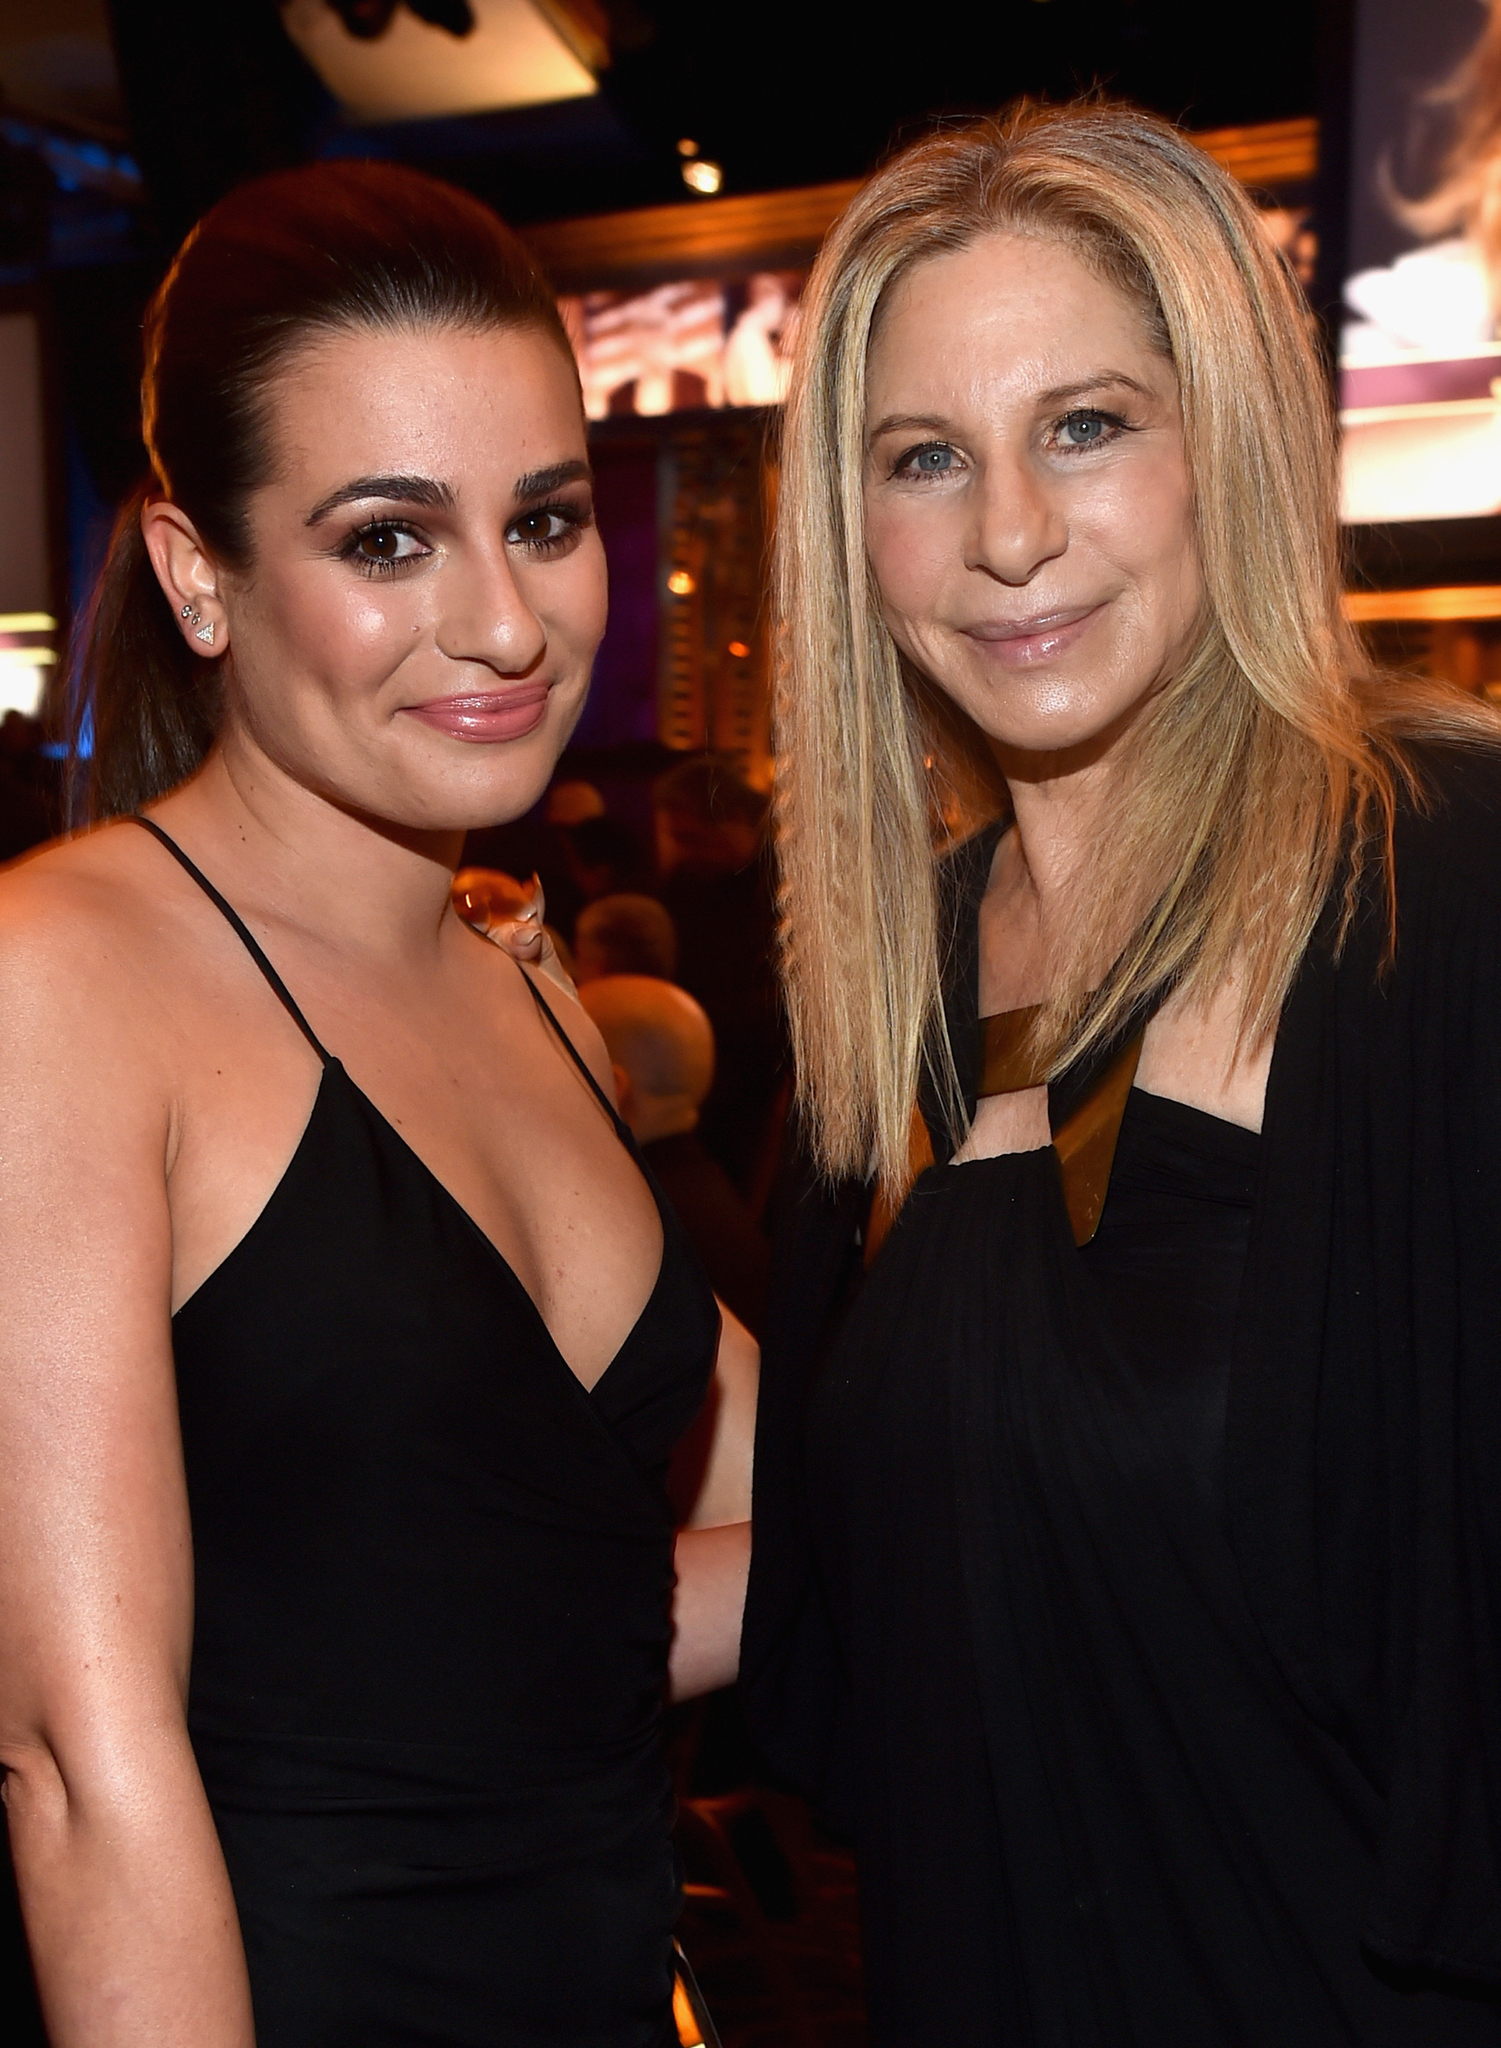 Barbra Streisand and Lea Michele